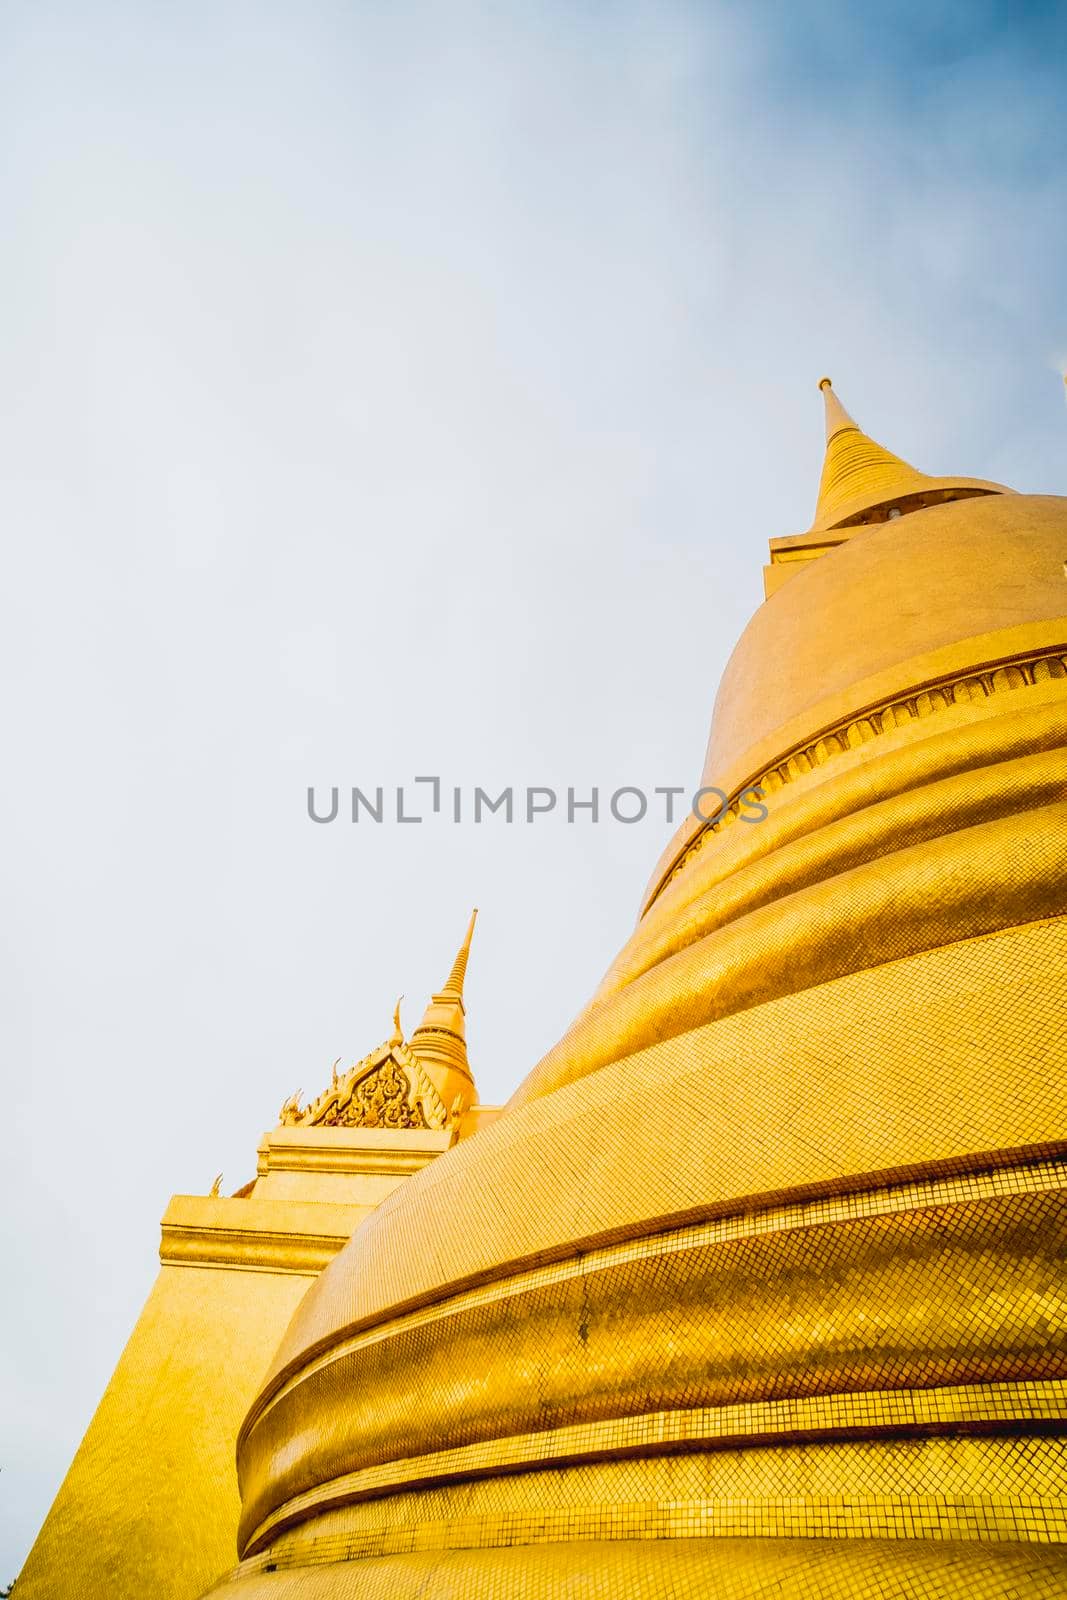 Golden Stupa of Temple of the Emerald Buddha.  Wat Phra Si Rattana Satsadaram.  Wat Phra Kaew. landmark of Bangkok Thailand with pink sky at dusk